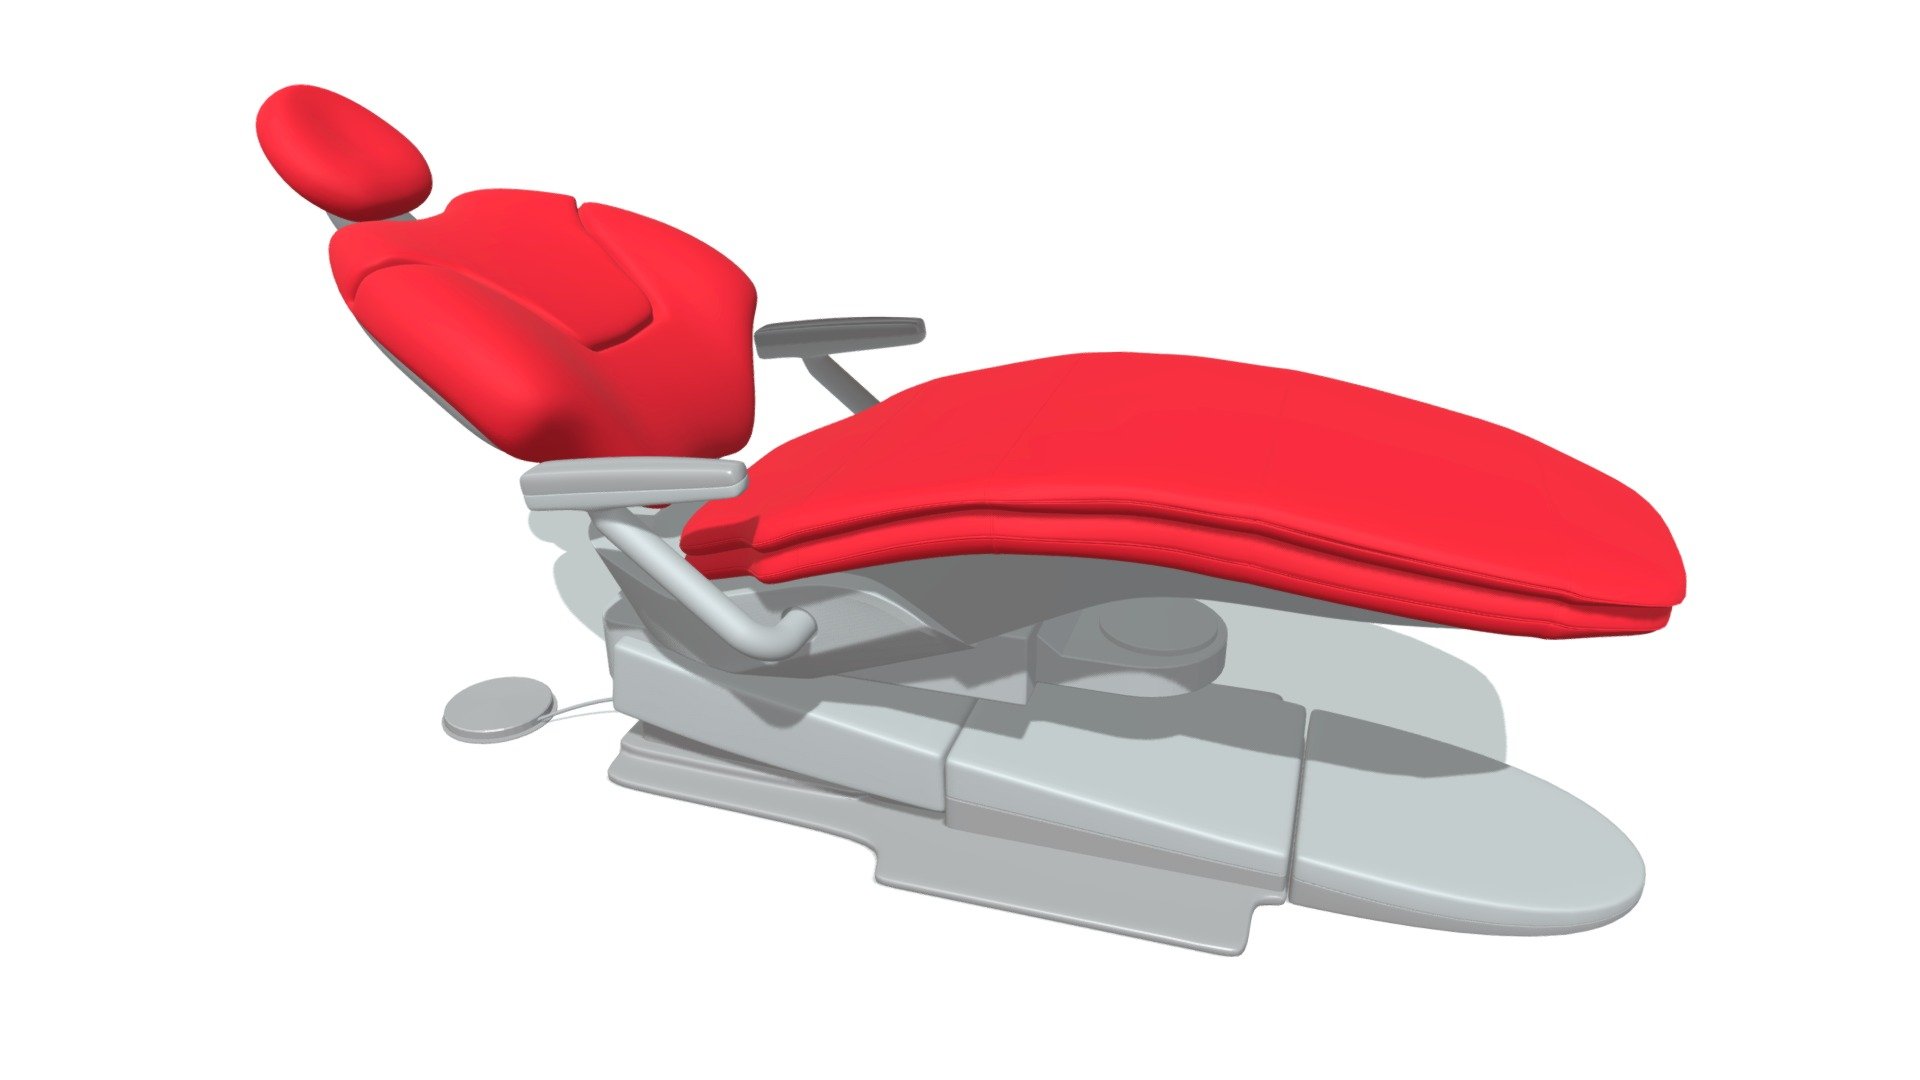 High quality 3d model of dental chair 3d model